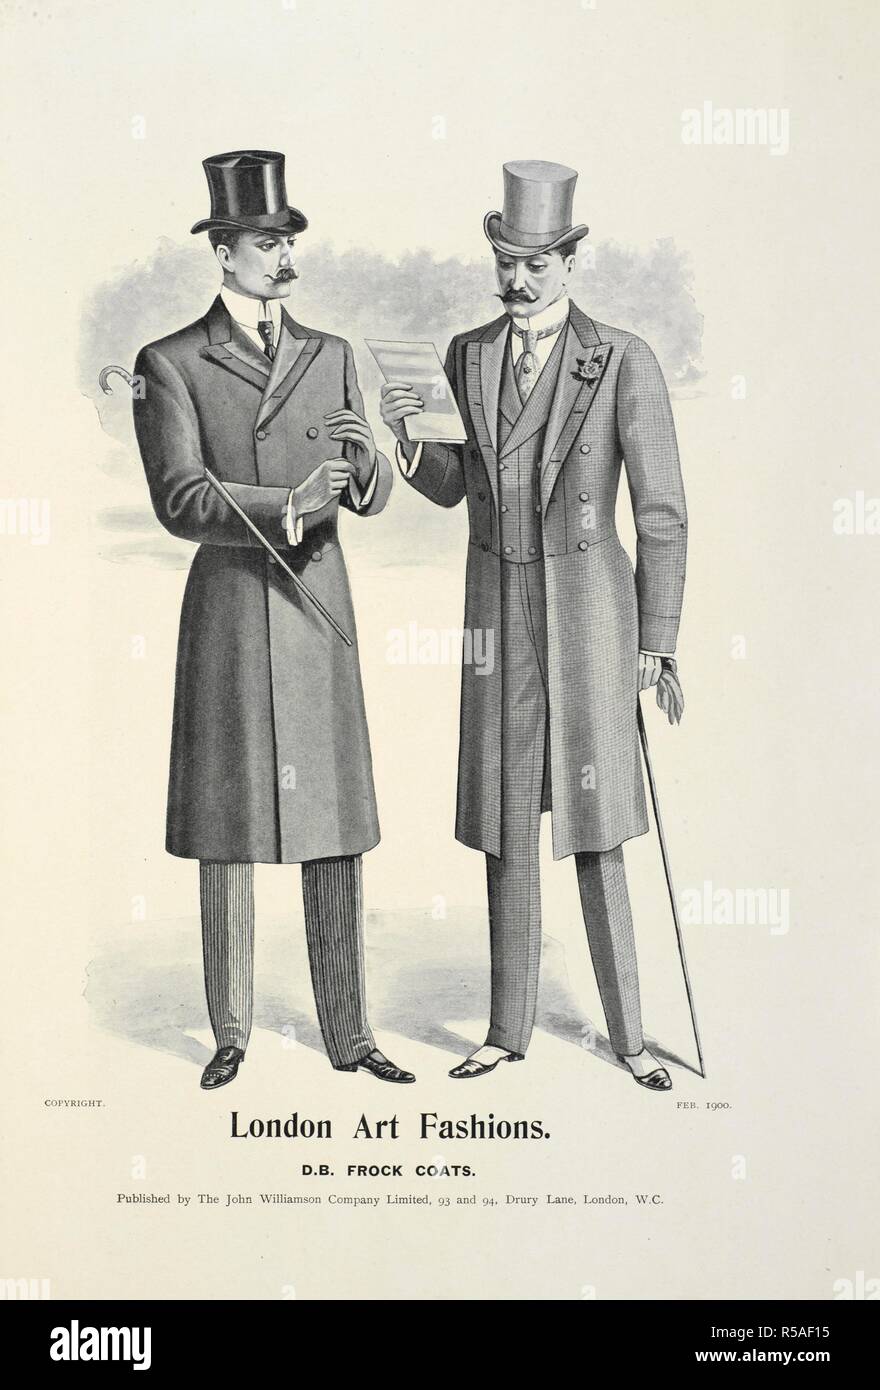 D.B. frock coats. London Art Fashion Journal. London, 1900. Source: London  art fashion journal. February 1900, opposite page 13 Stock Photo - Alamy